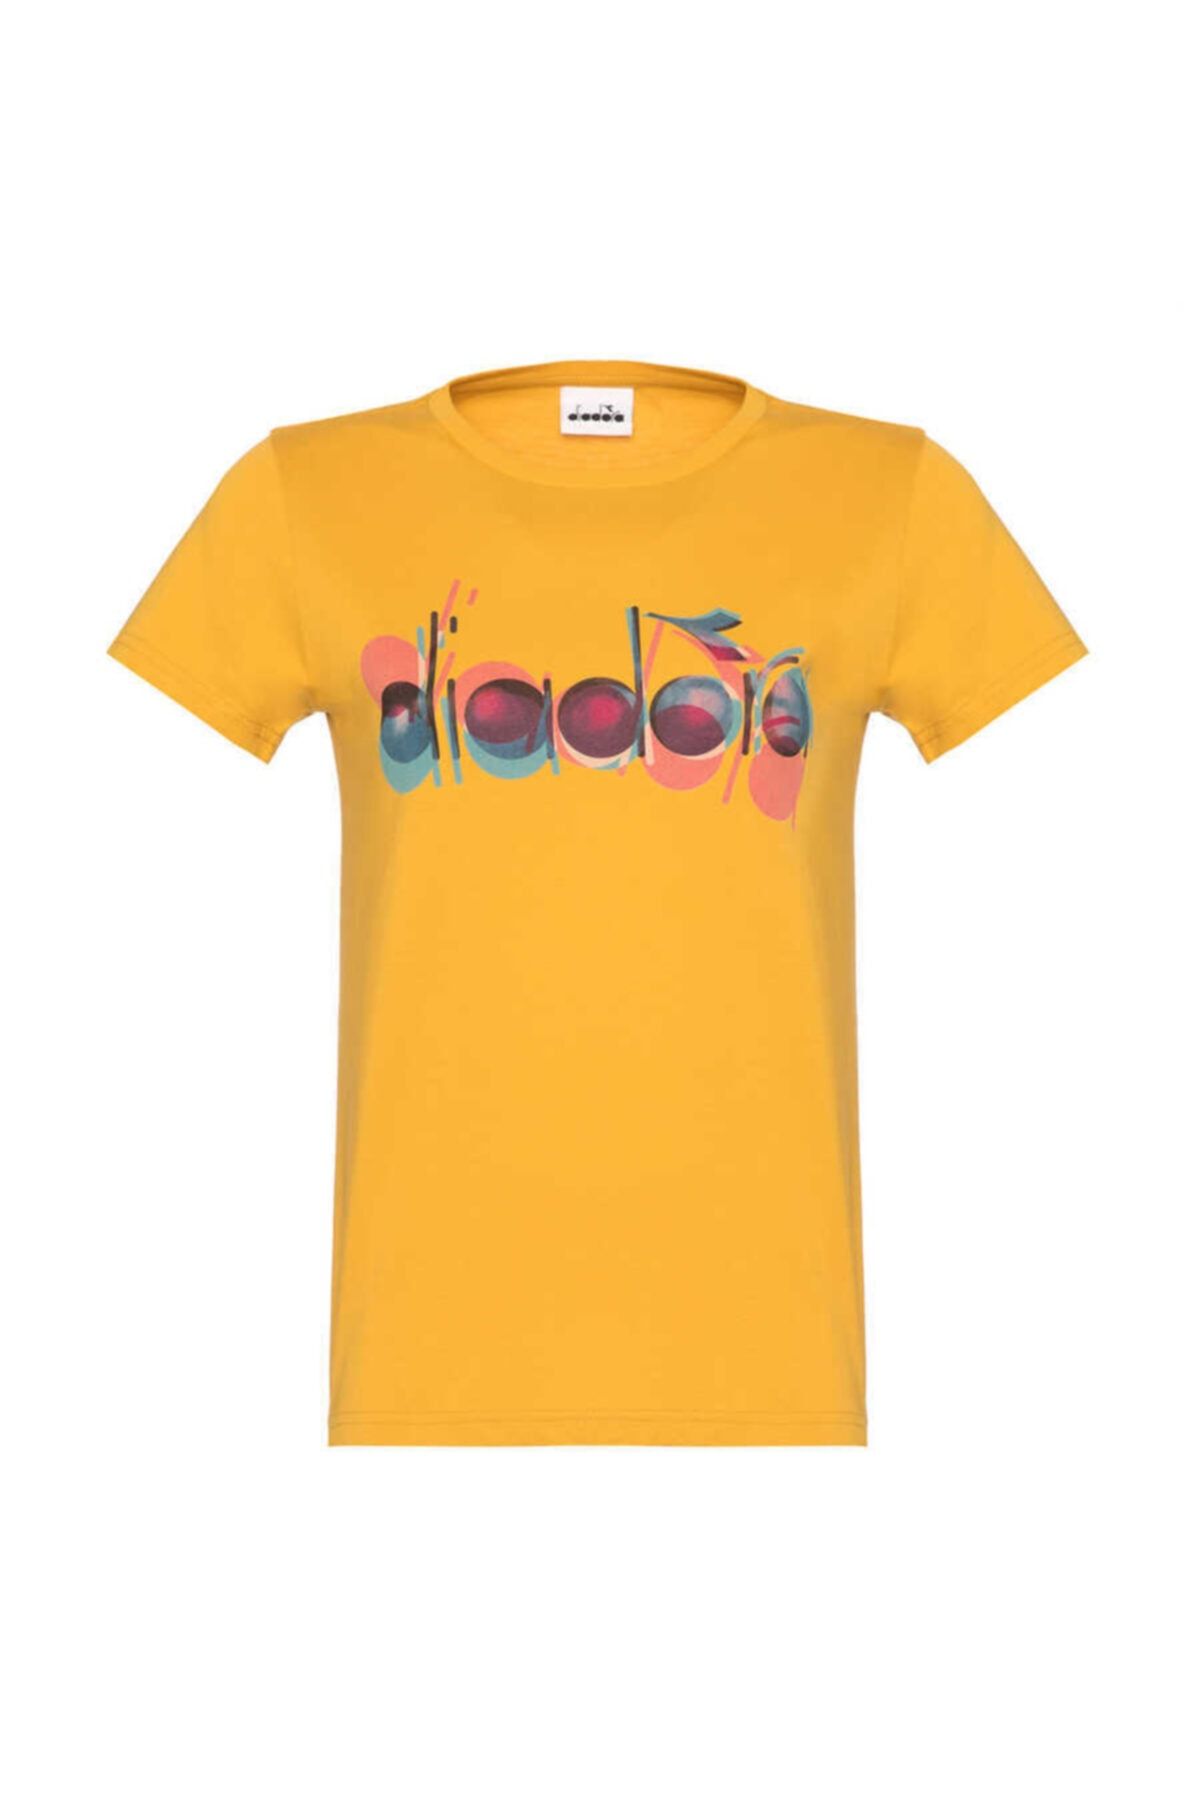 Diadora Dıadora Ss T-shirt Iconic Hardal Sarı Kadın Tişört - 502.176088-35042